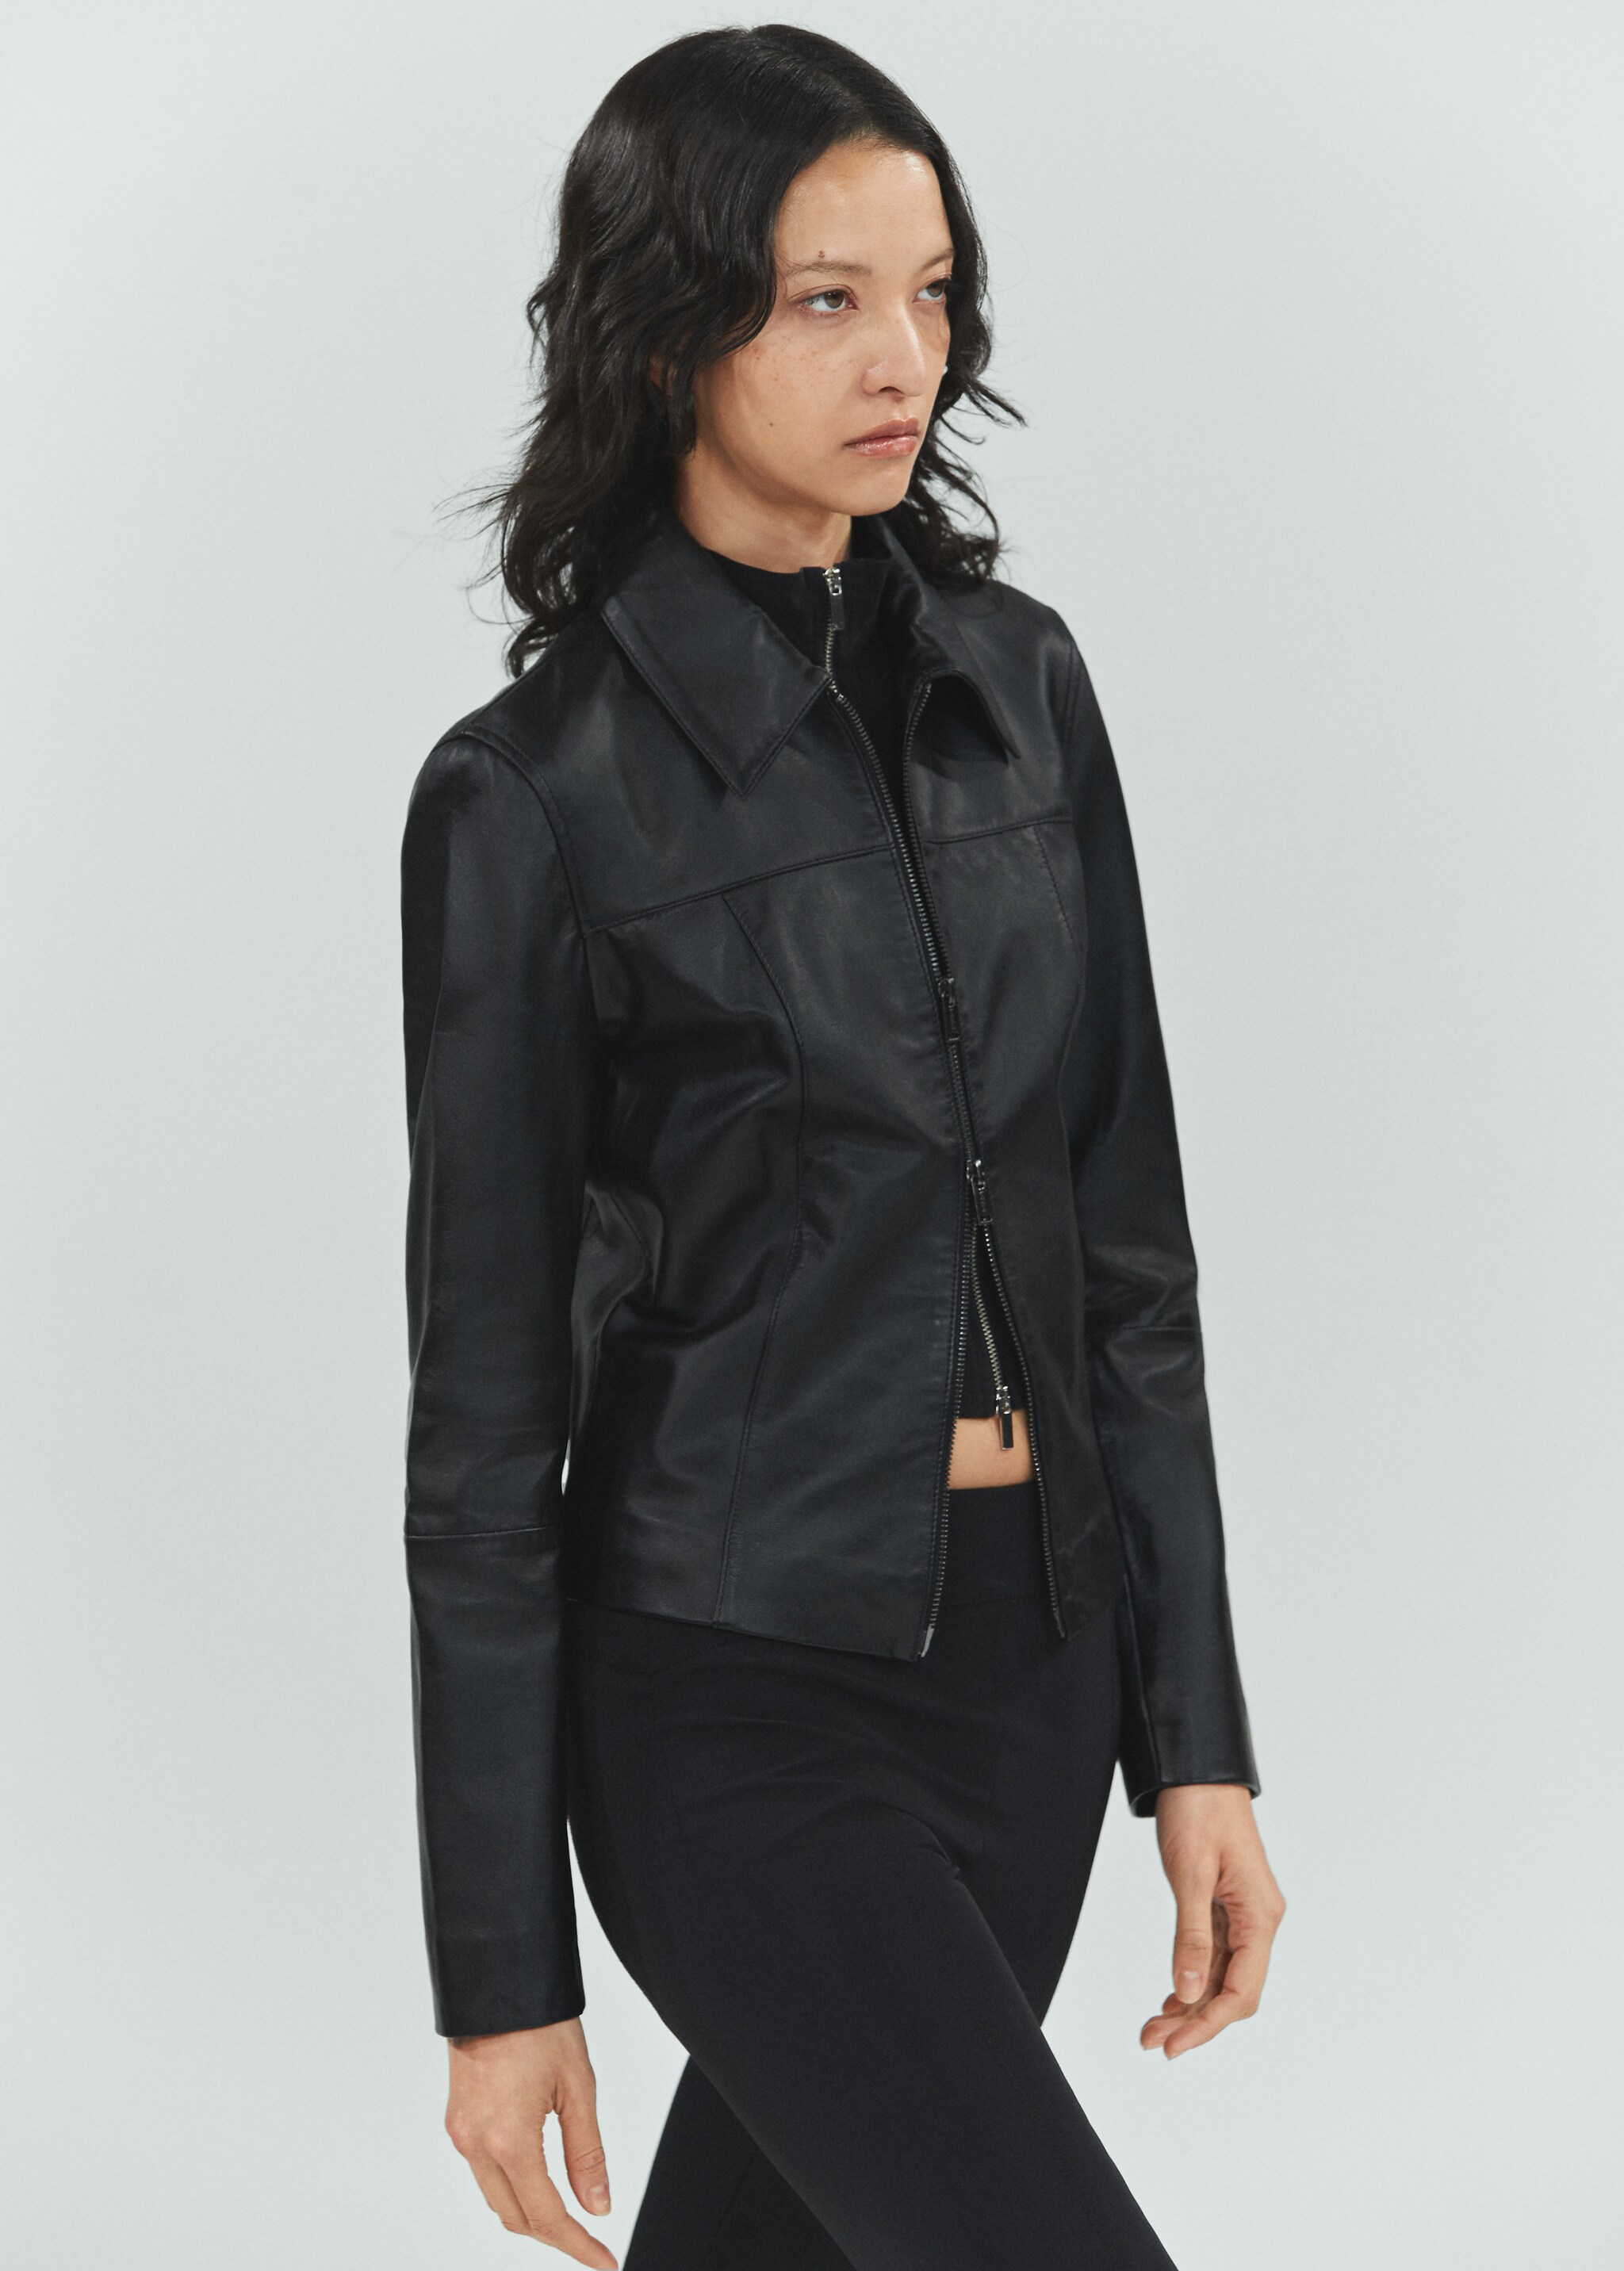 100% leather fitted jacket - Medium plane